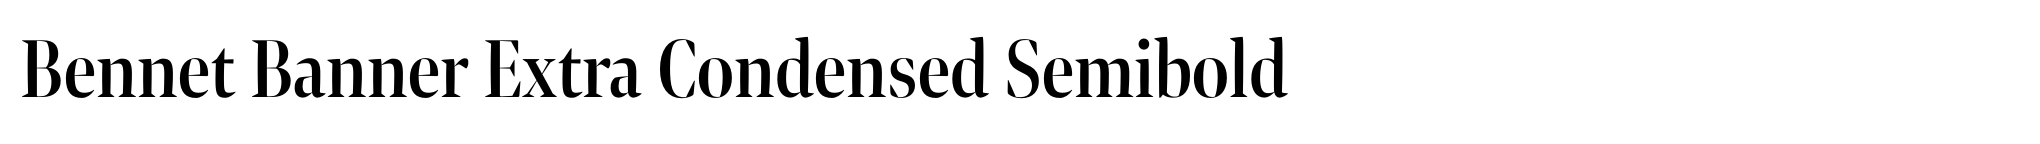 Bennet Banner Extra Condensed Semibold image